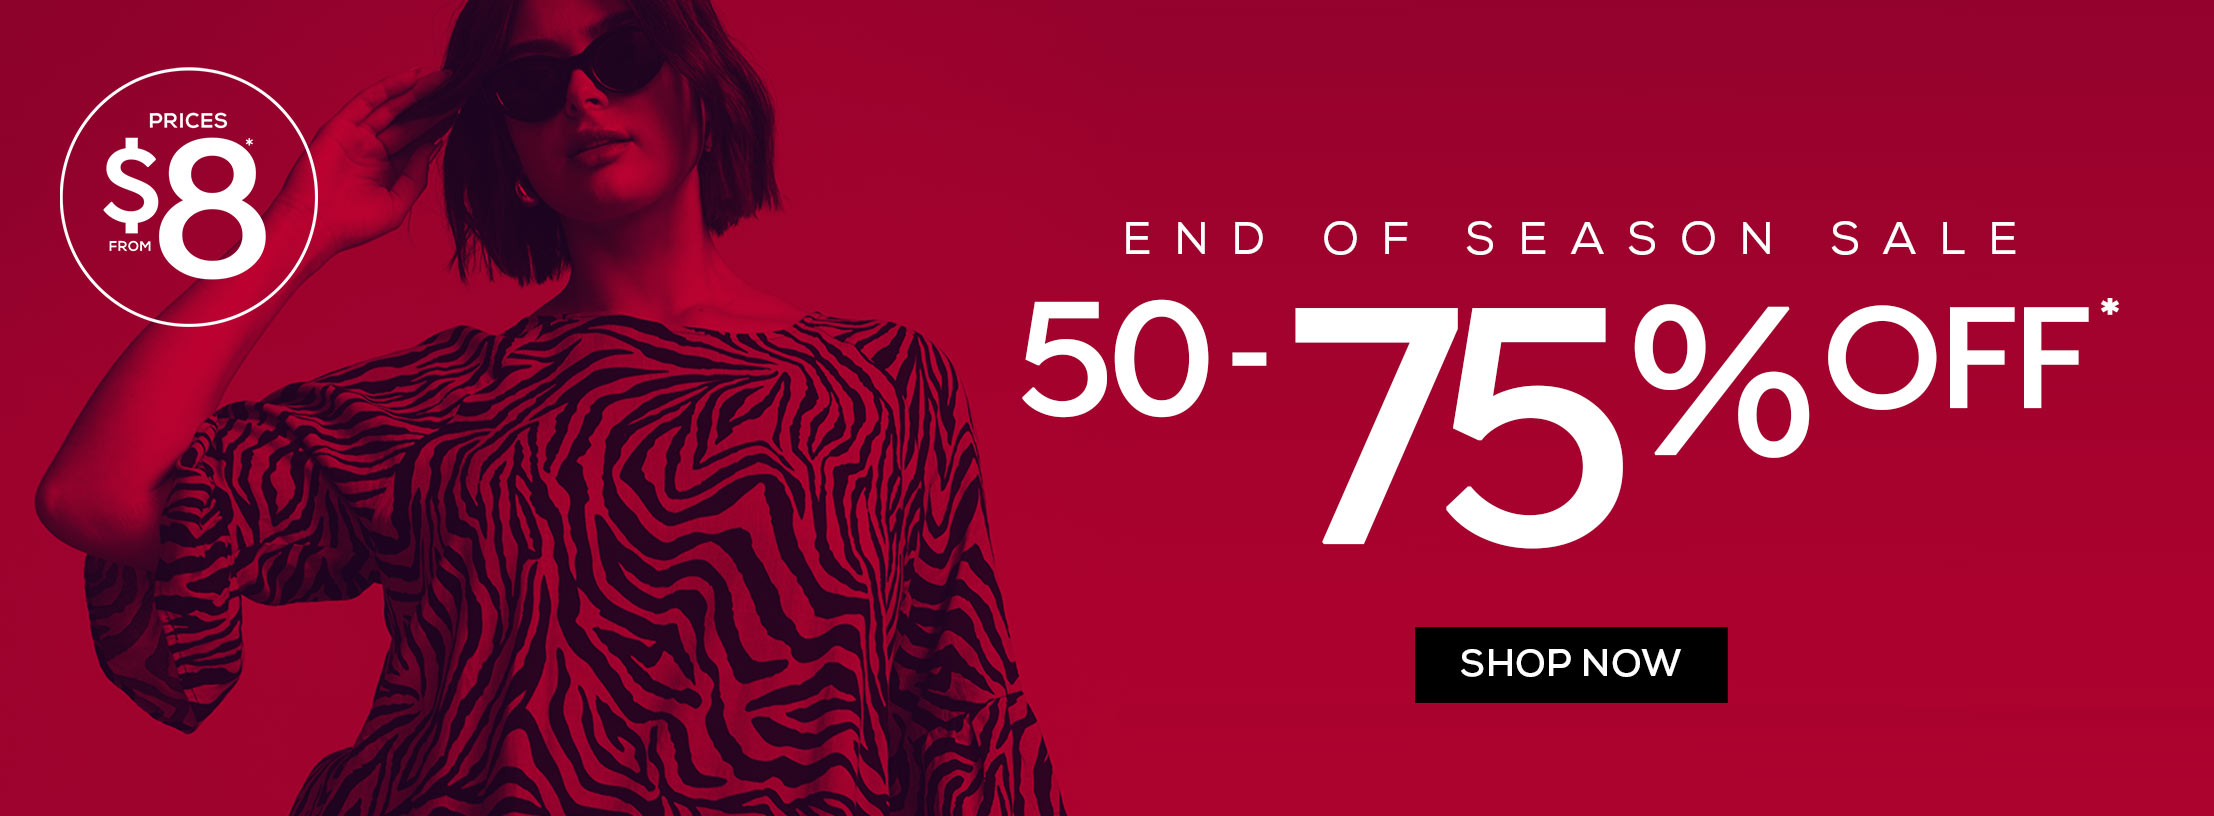 Shop End of Season Sale 50-75% OFF*